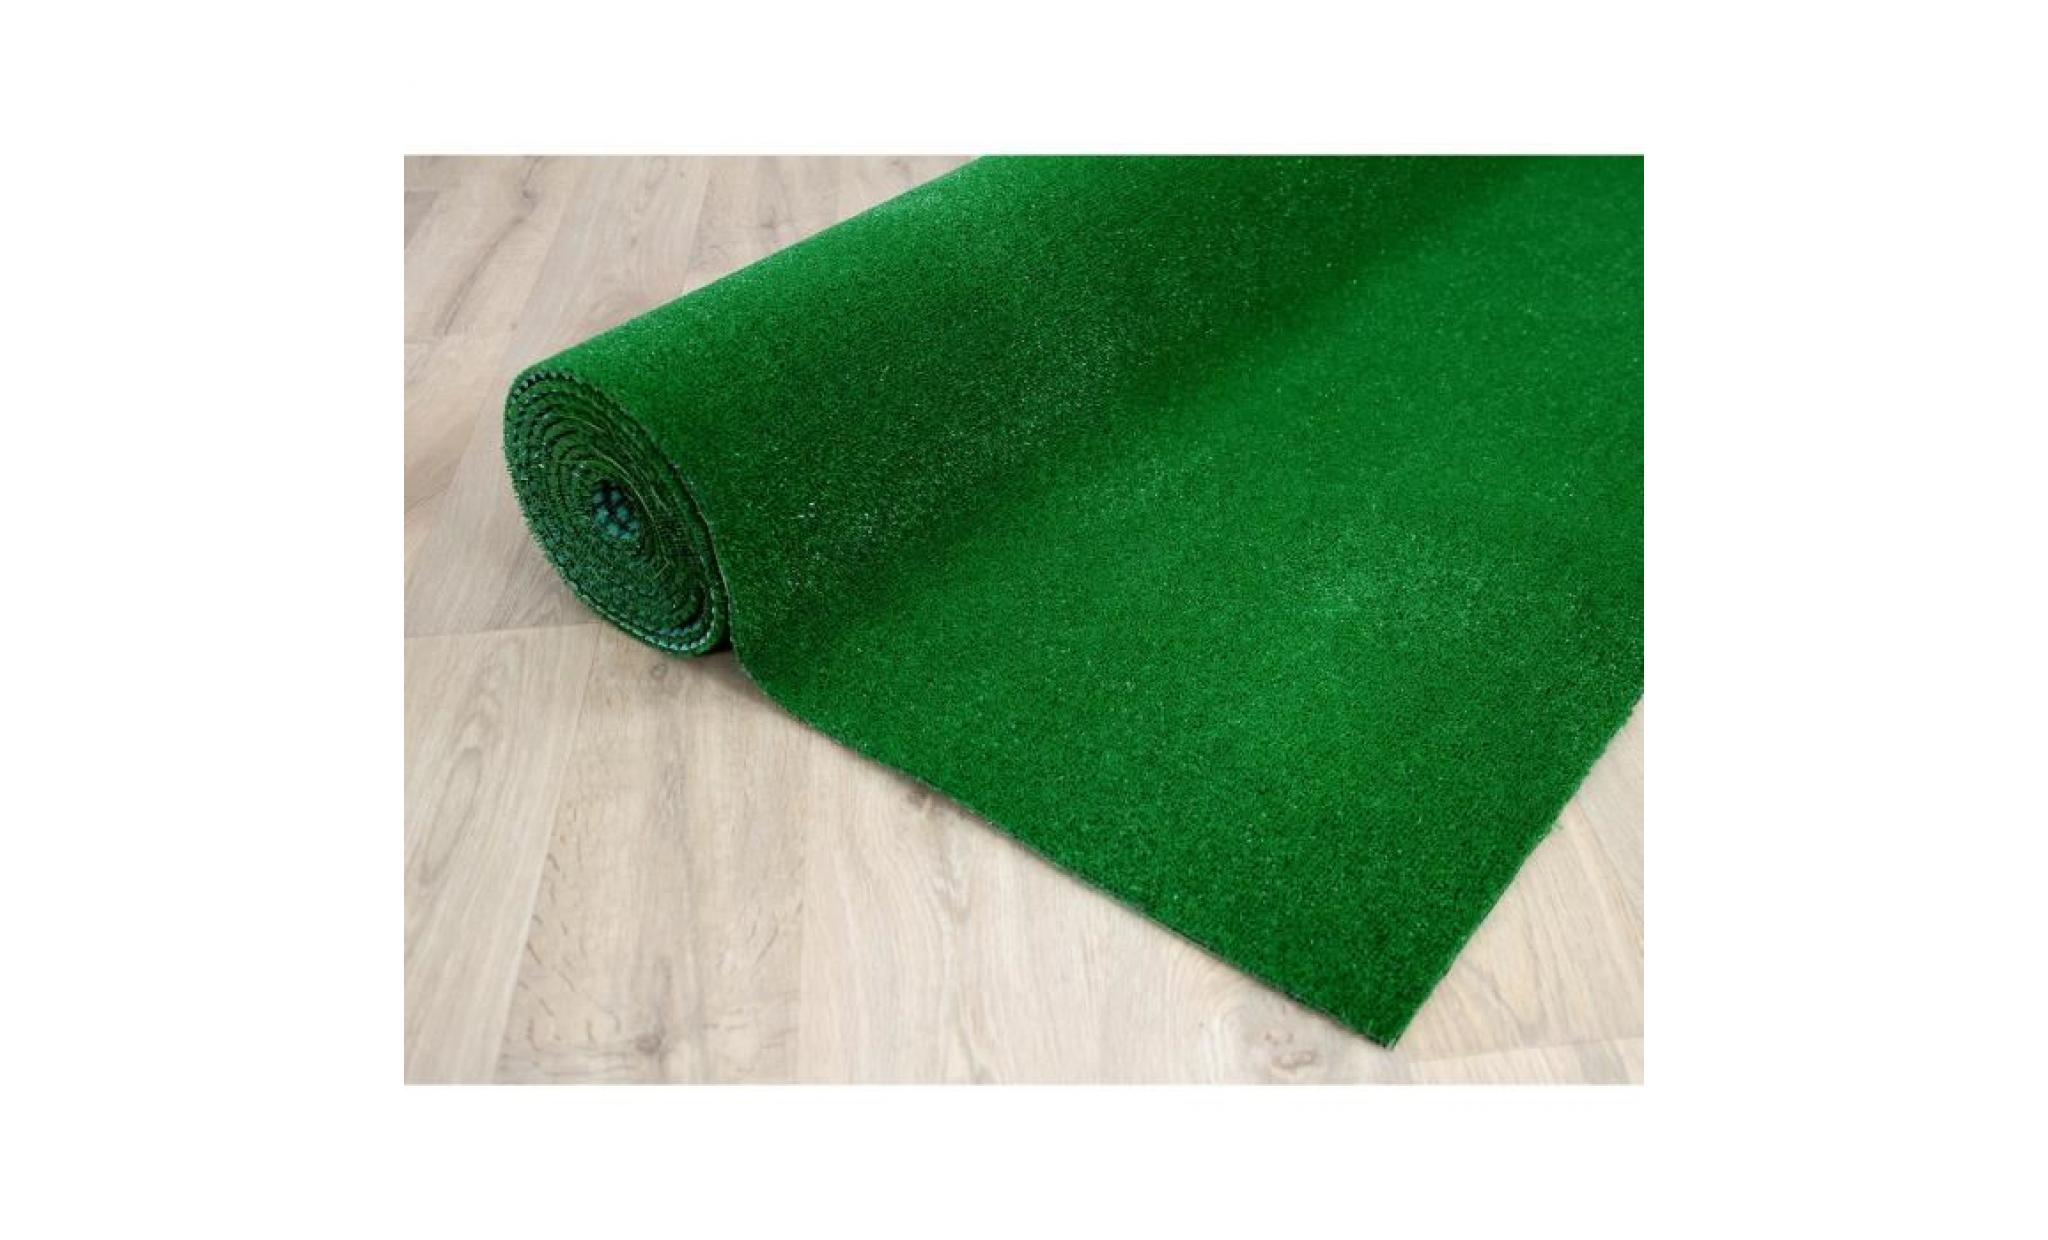 york   tapis type gazon artificiel avec nubs – pour jardin, terrasse, balcon   vert   [400x100 cm]